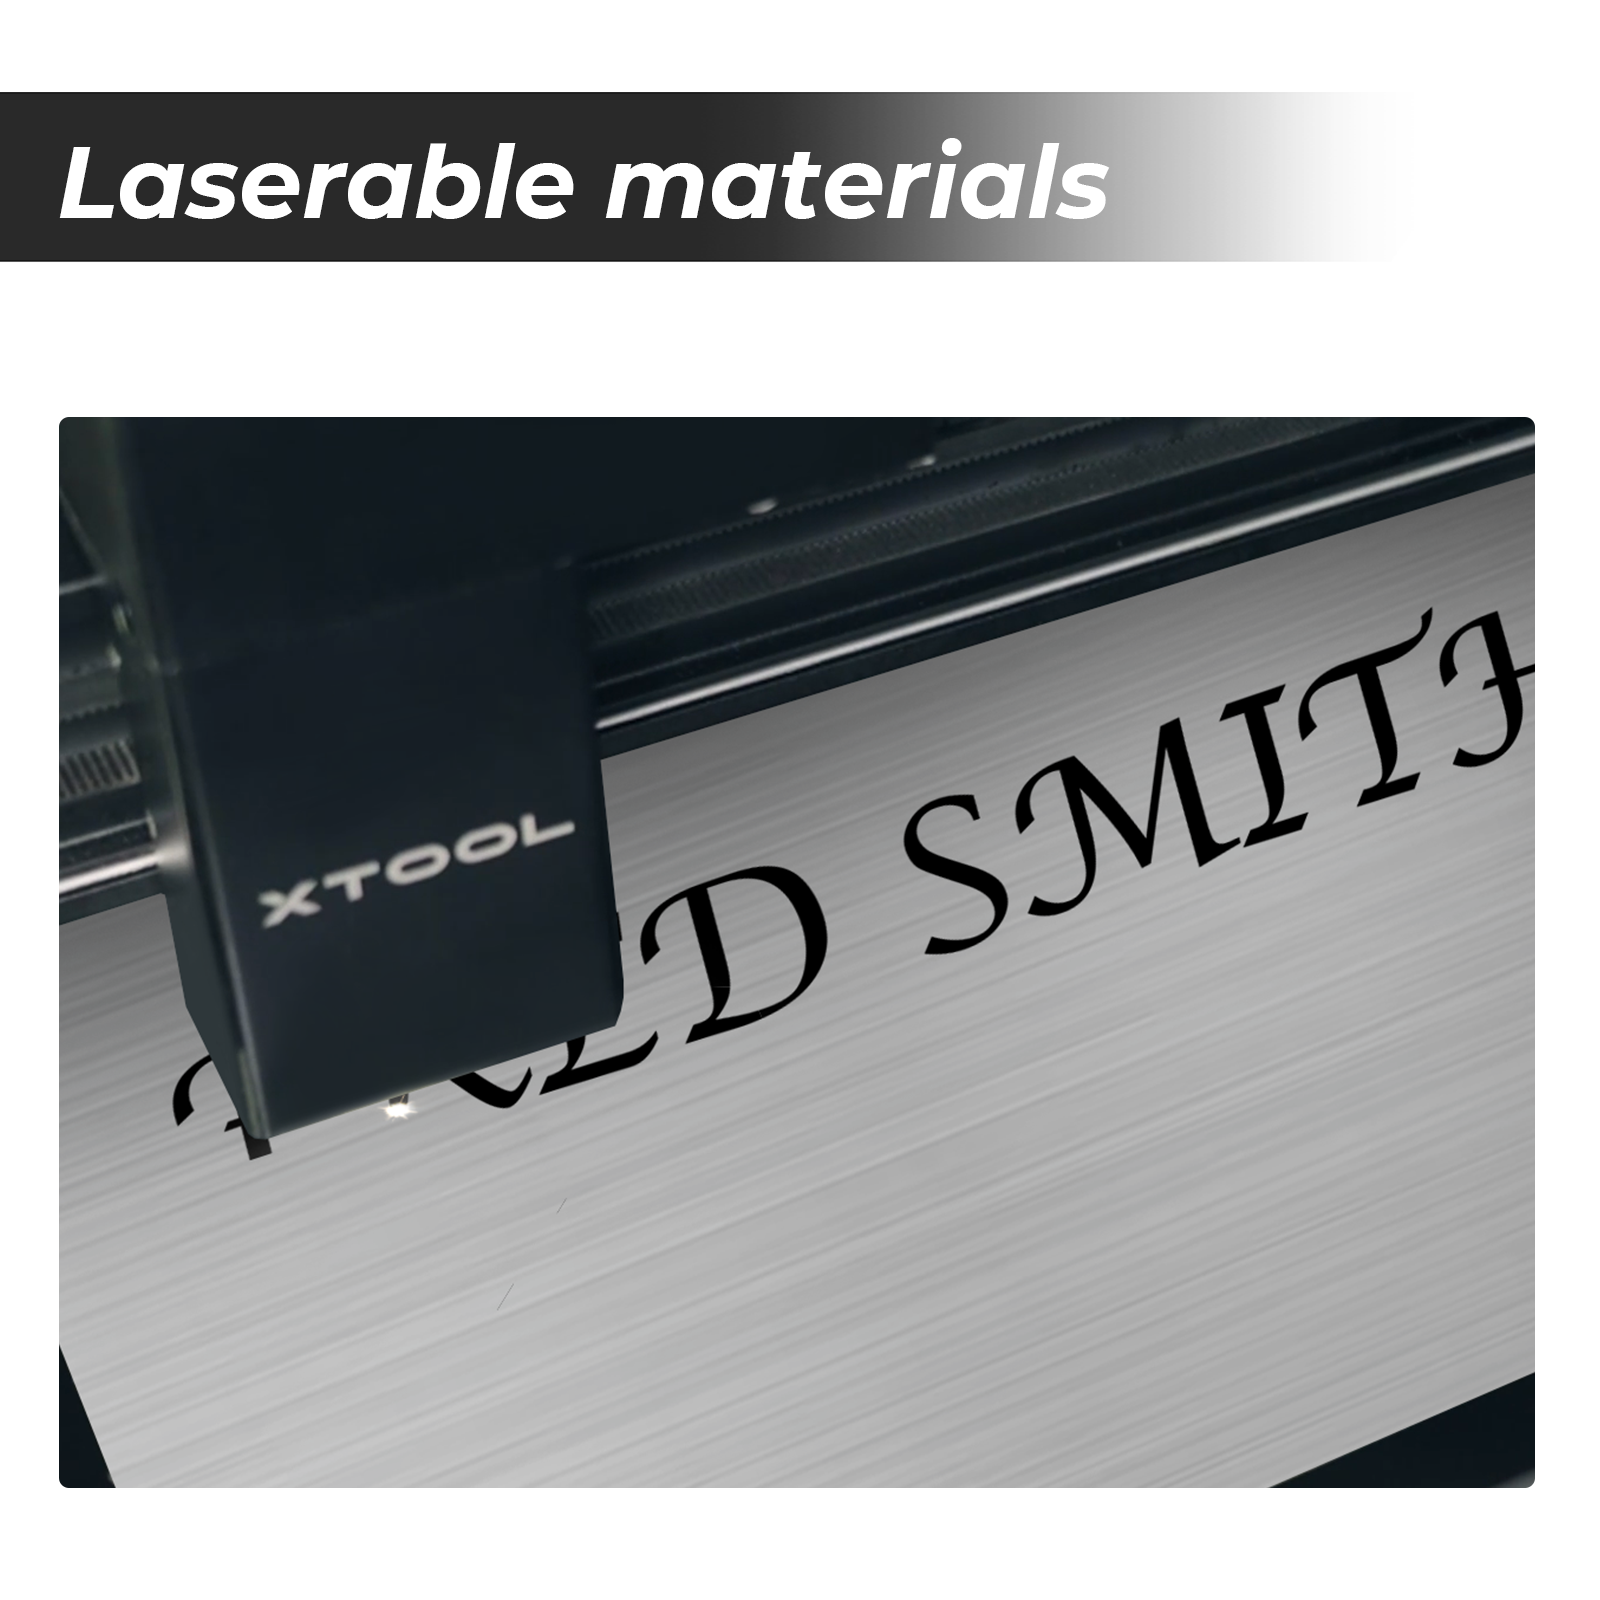 Laser Engraving Two-Tone Plastic Nameplate Trial Kit (13pcs)